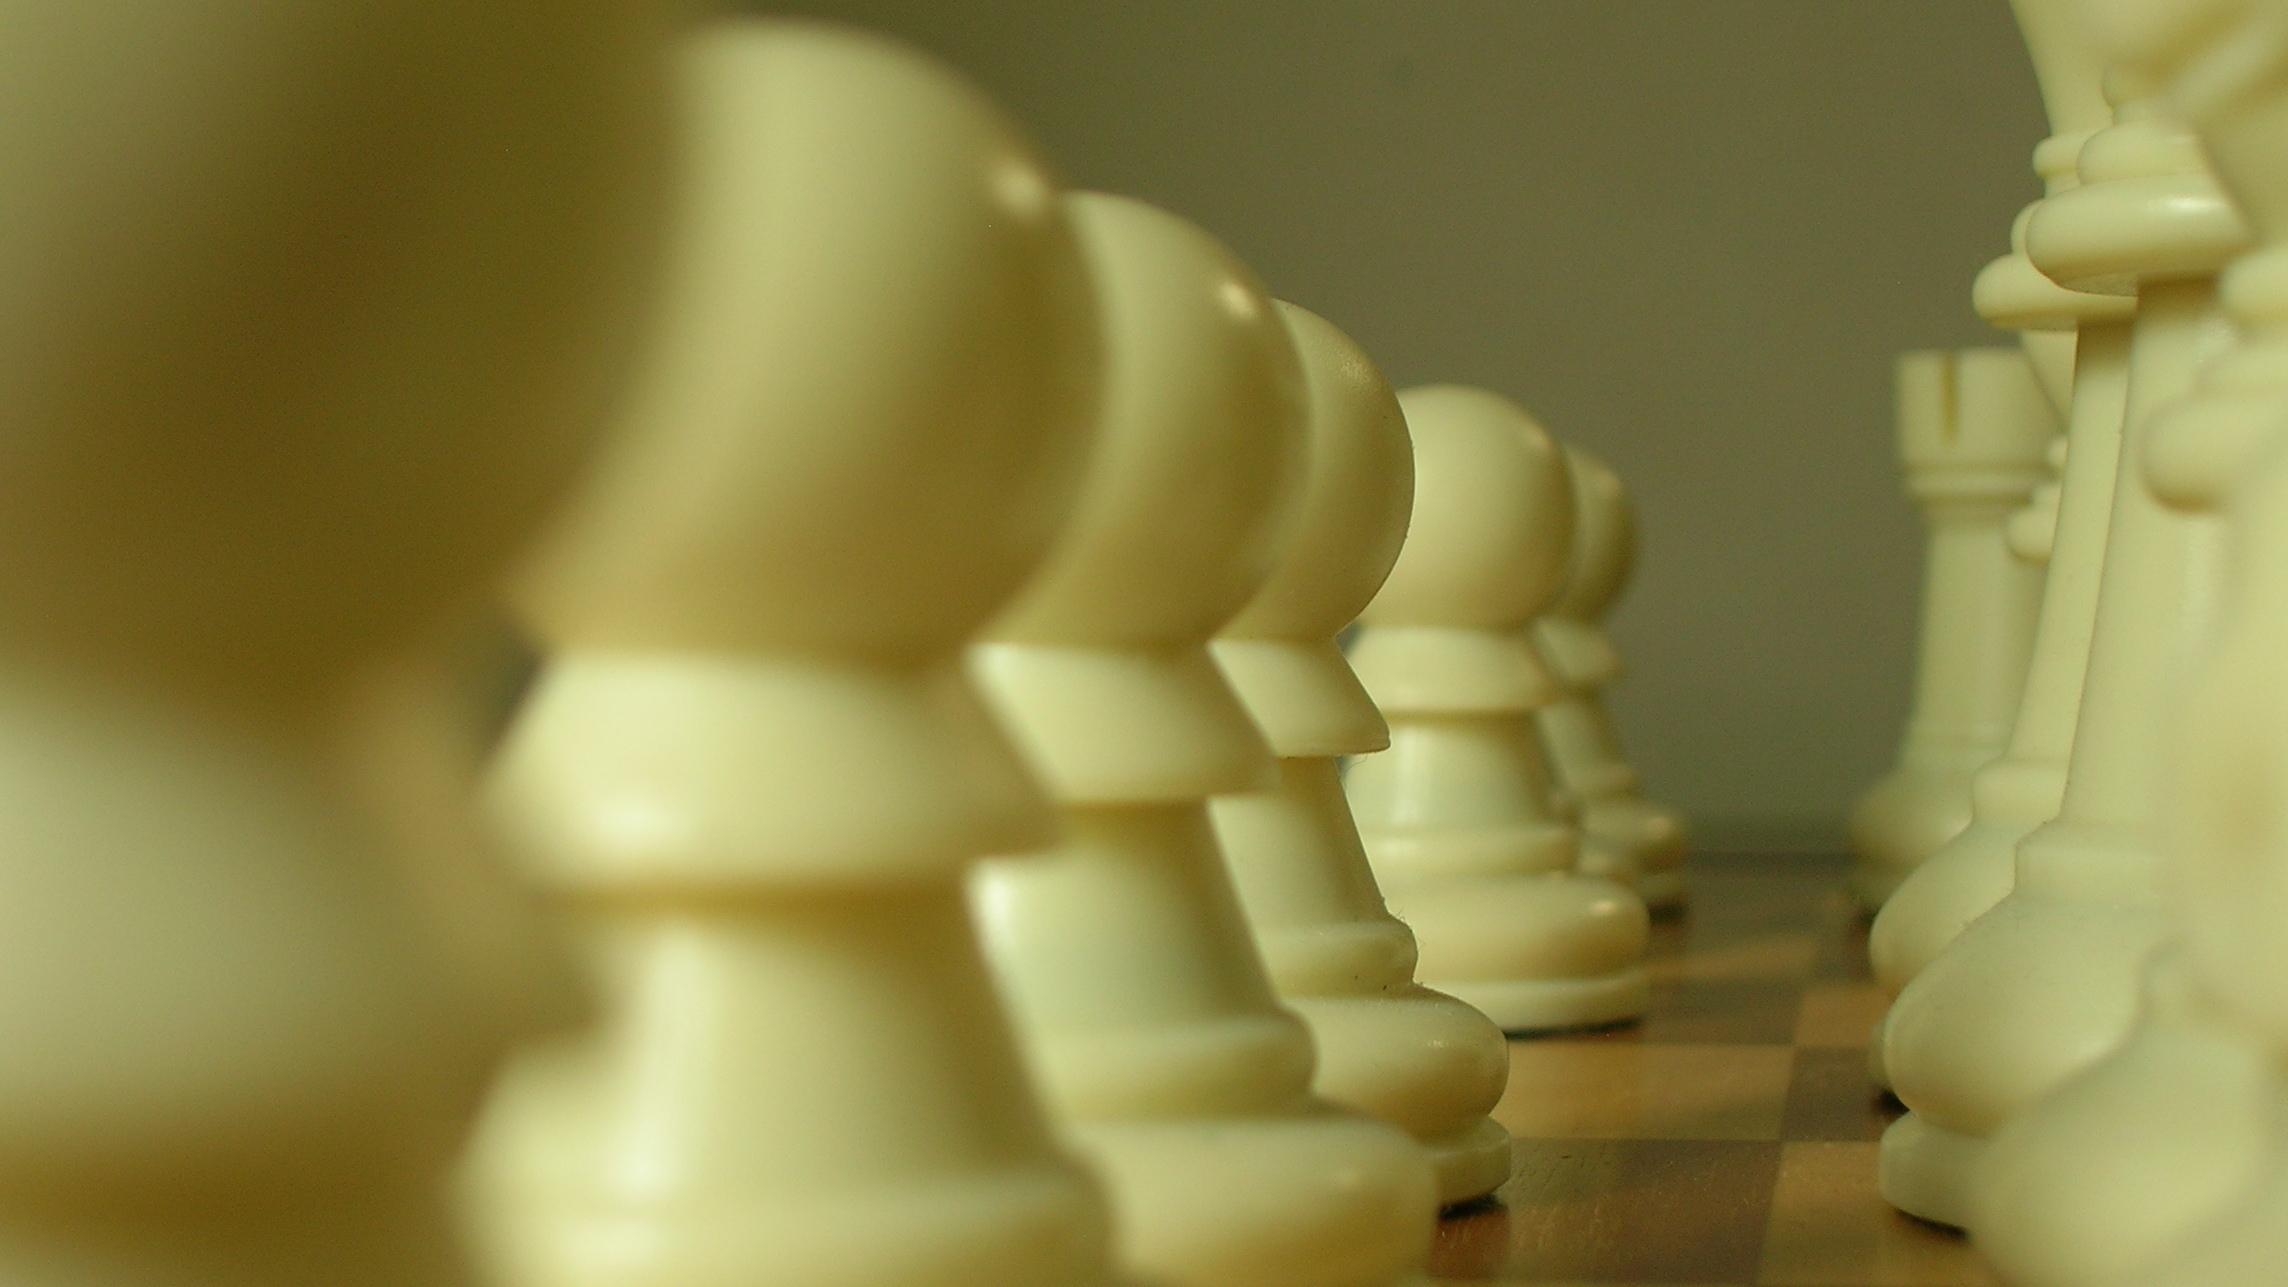 Chess Daily News by Susan Polgar - Honoring Tigran V. Petrosian